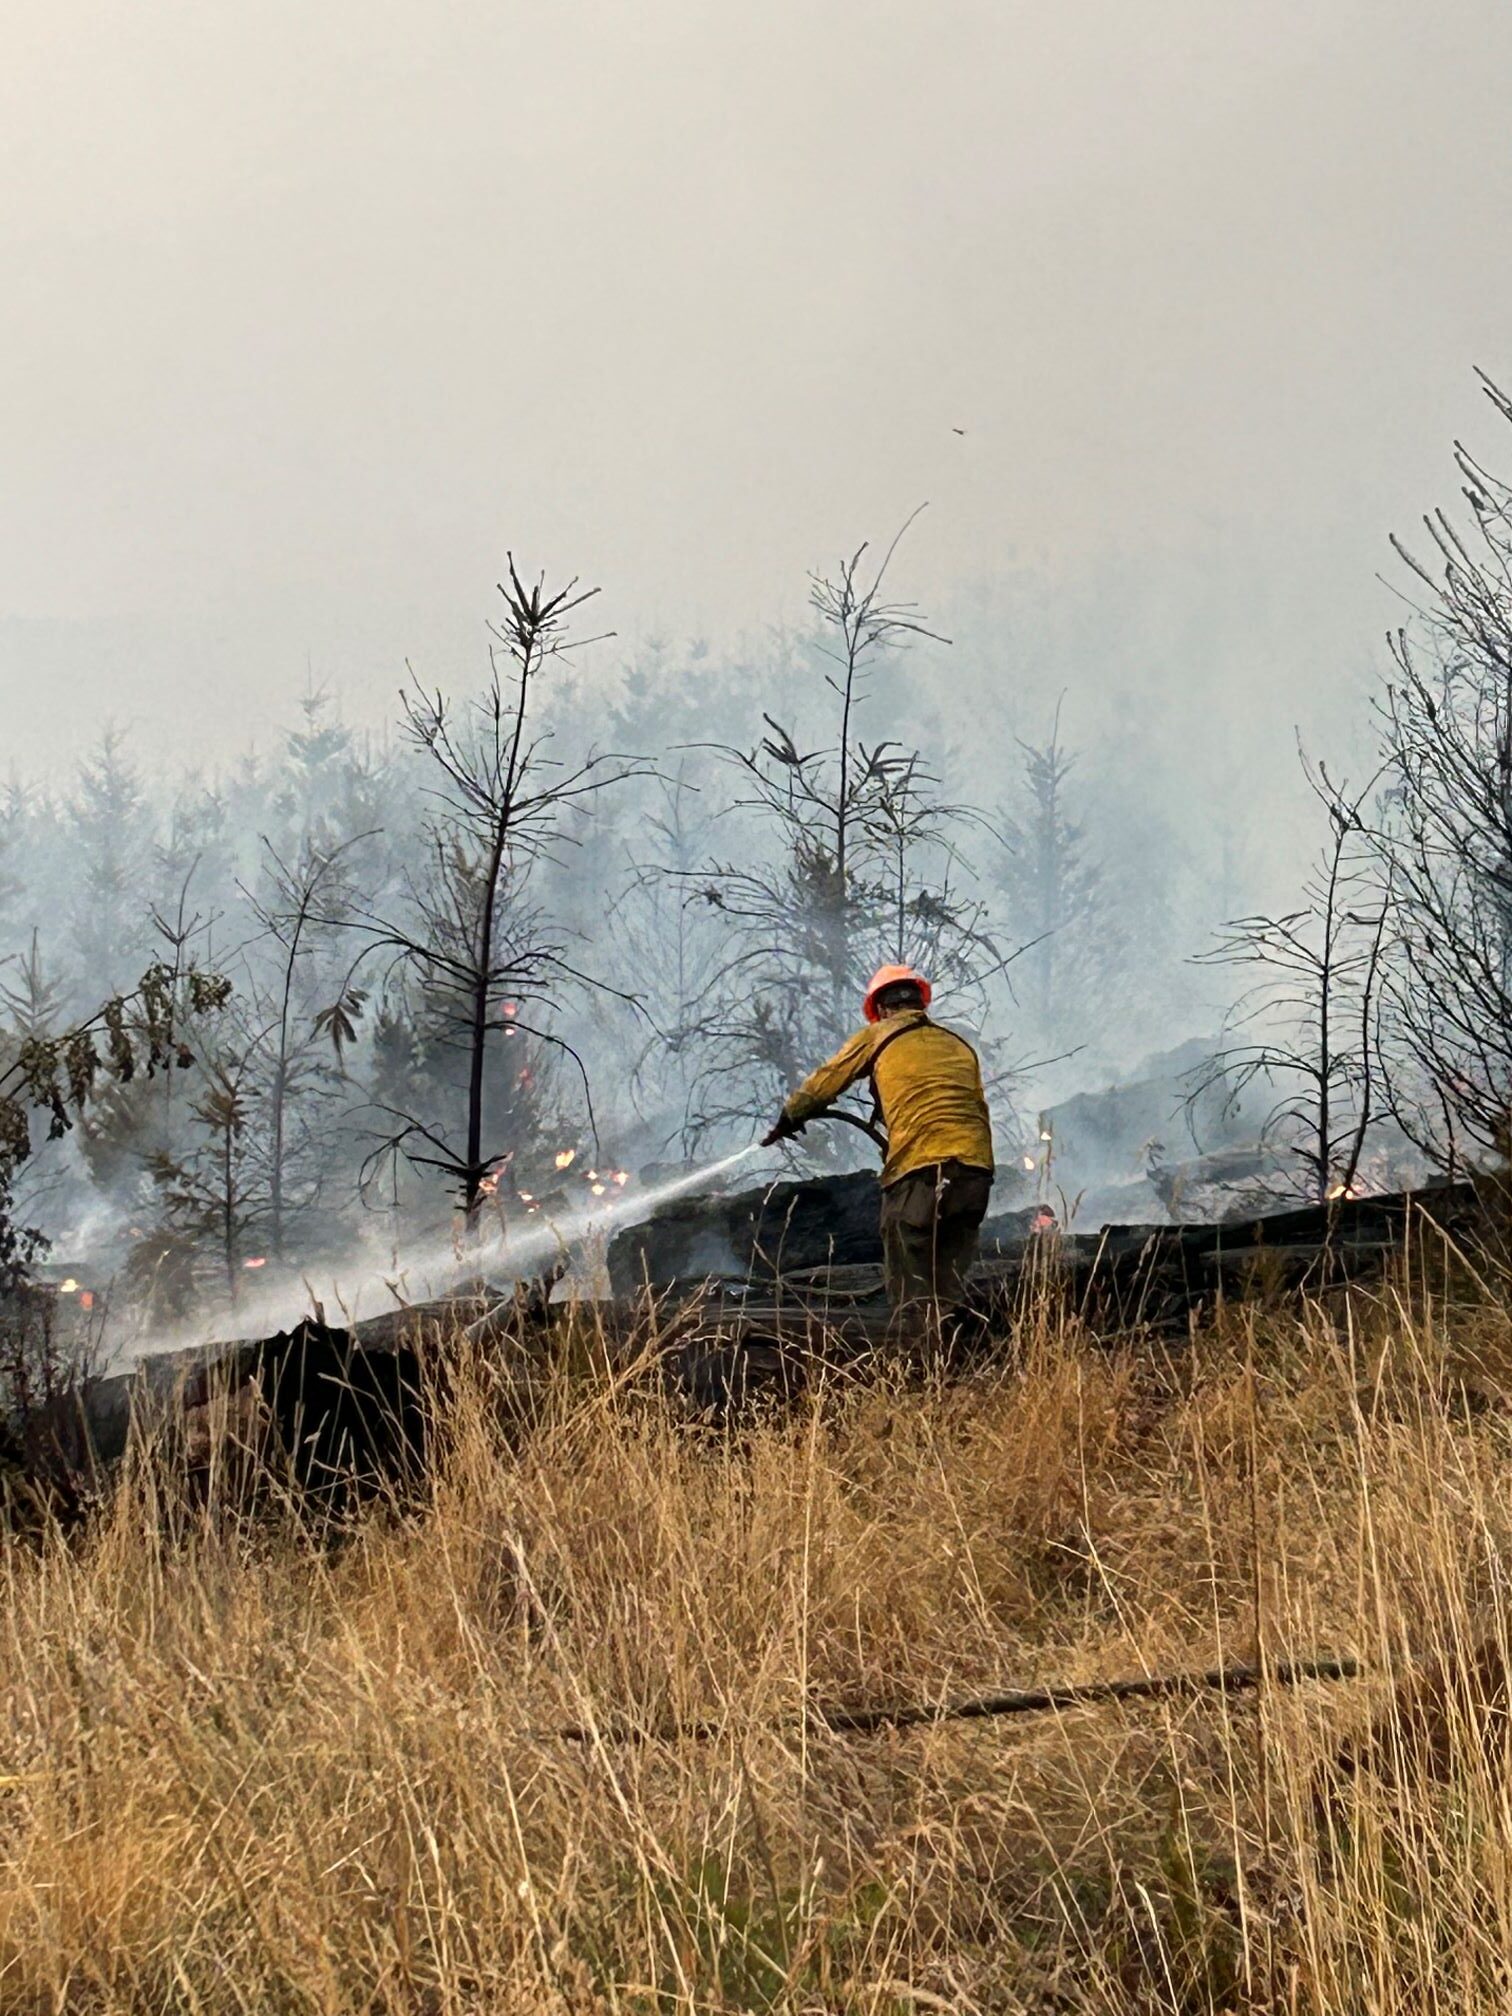 Private landowners key to keeping ahead of summer fires